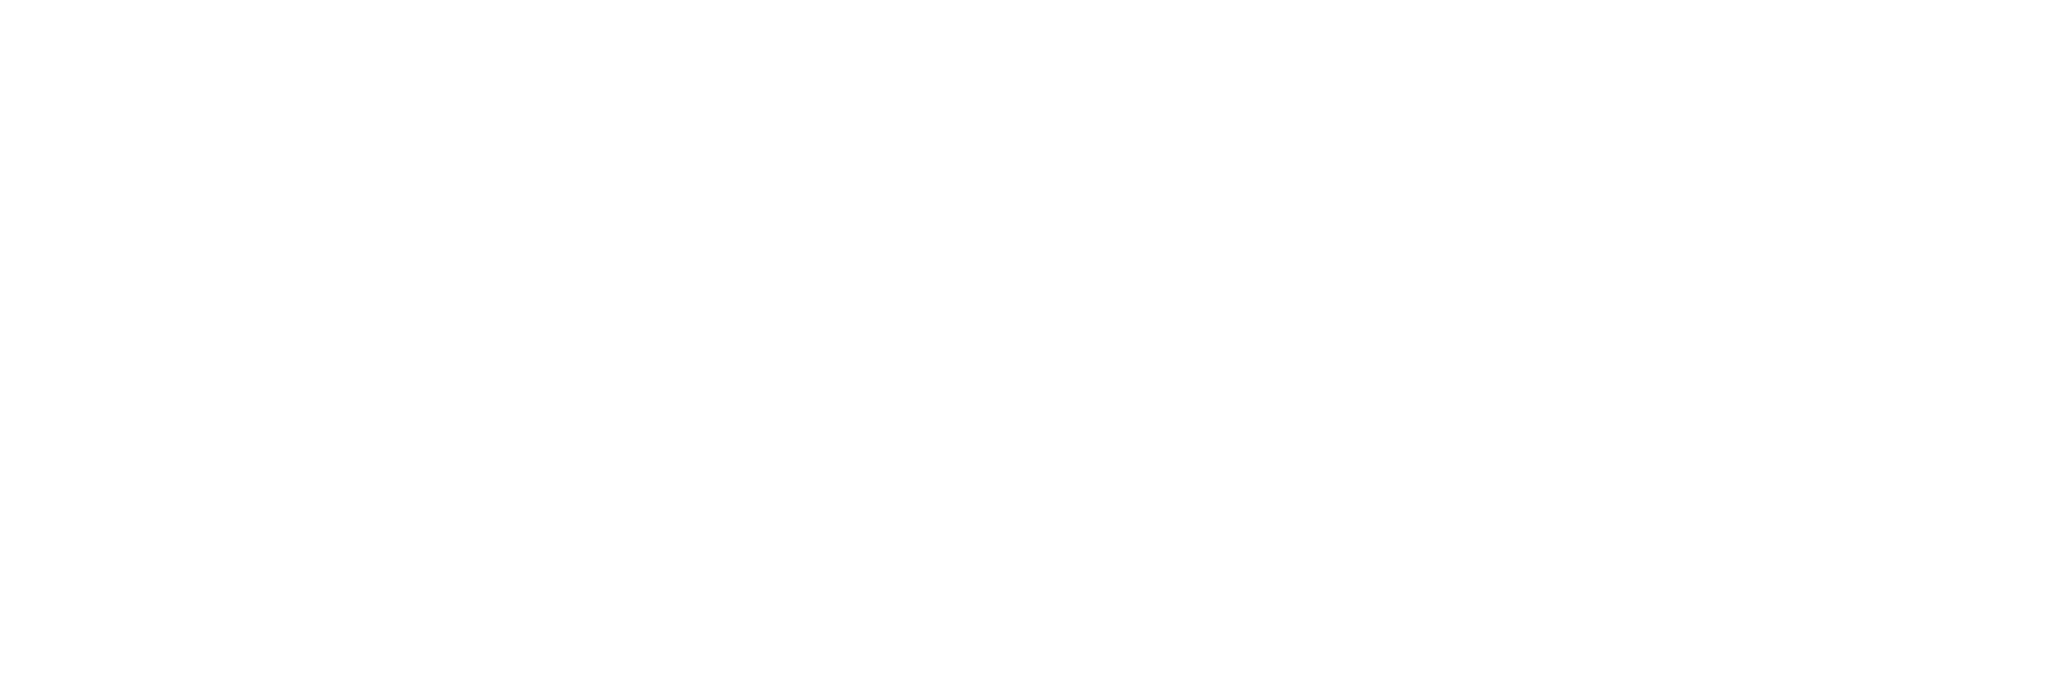 CourseVector